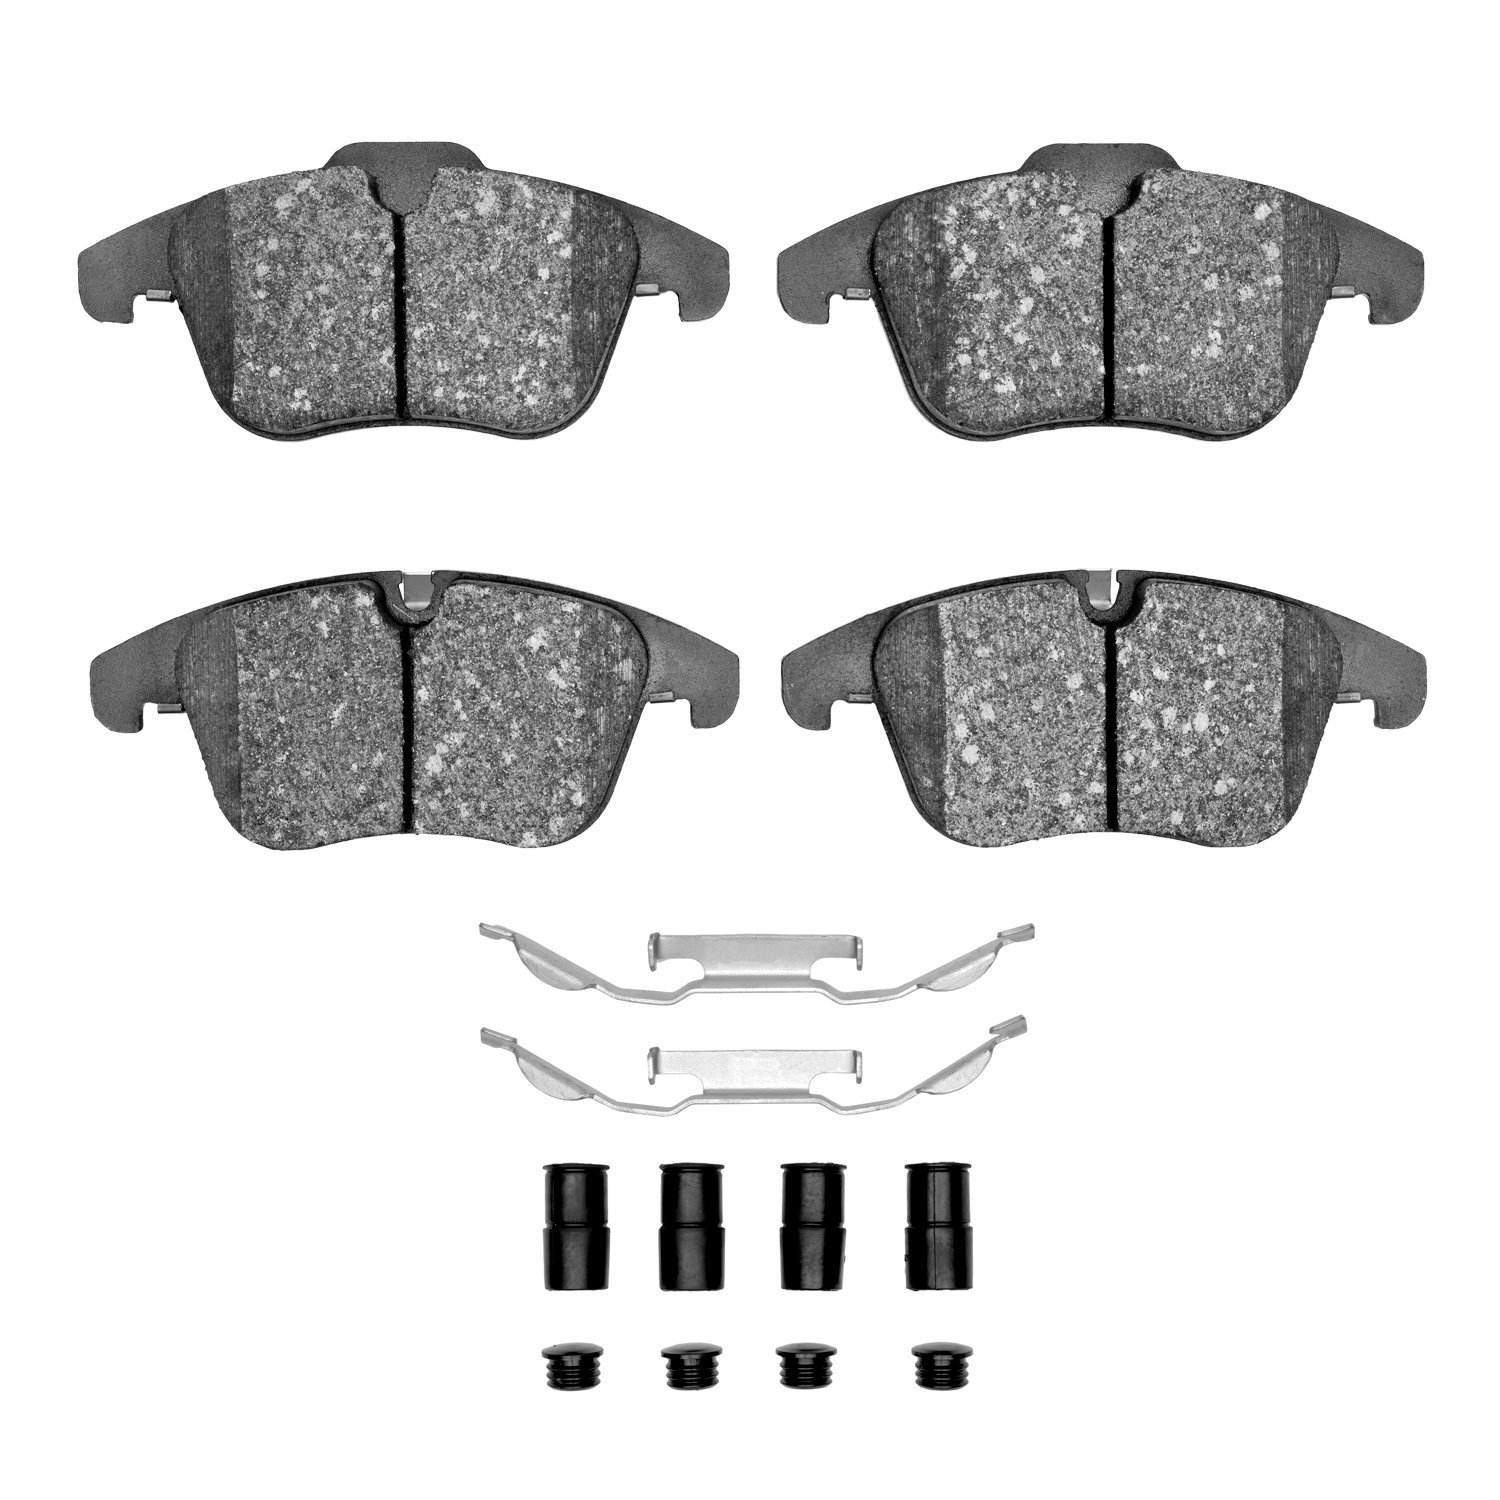 Semi-Metallic Brake Pads & Hardware Kit, 2006-2018 Fits Multiple Makes/Models, Position: Front